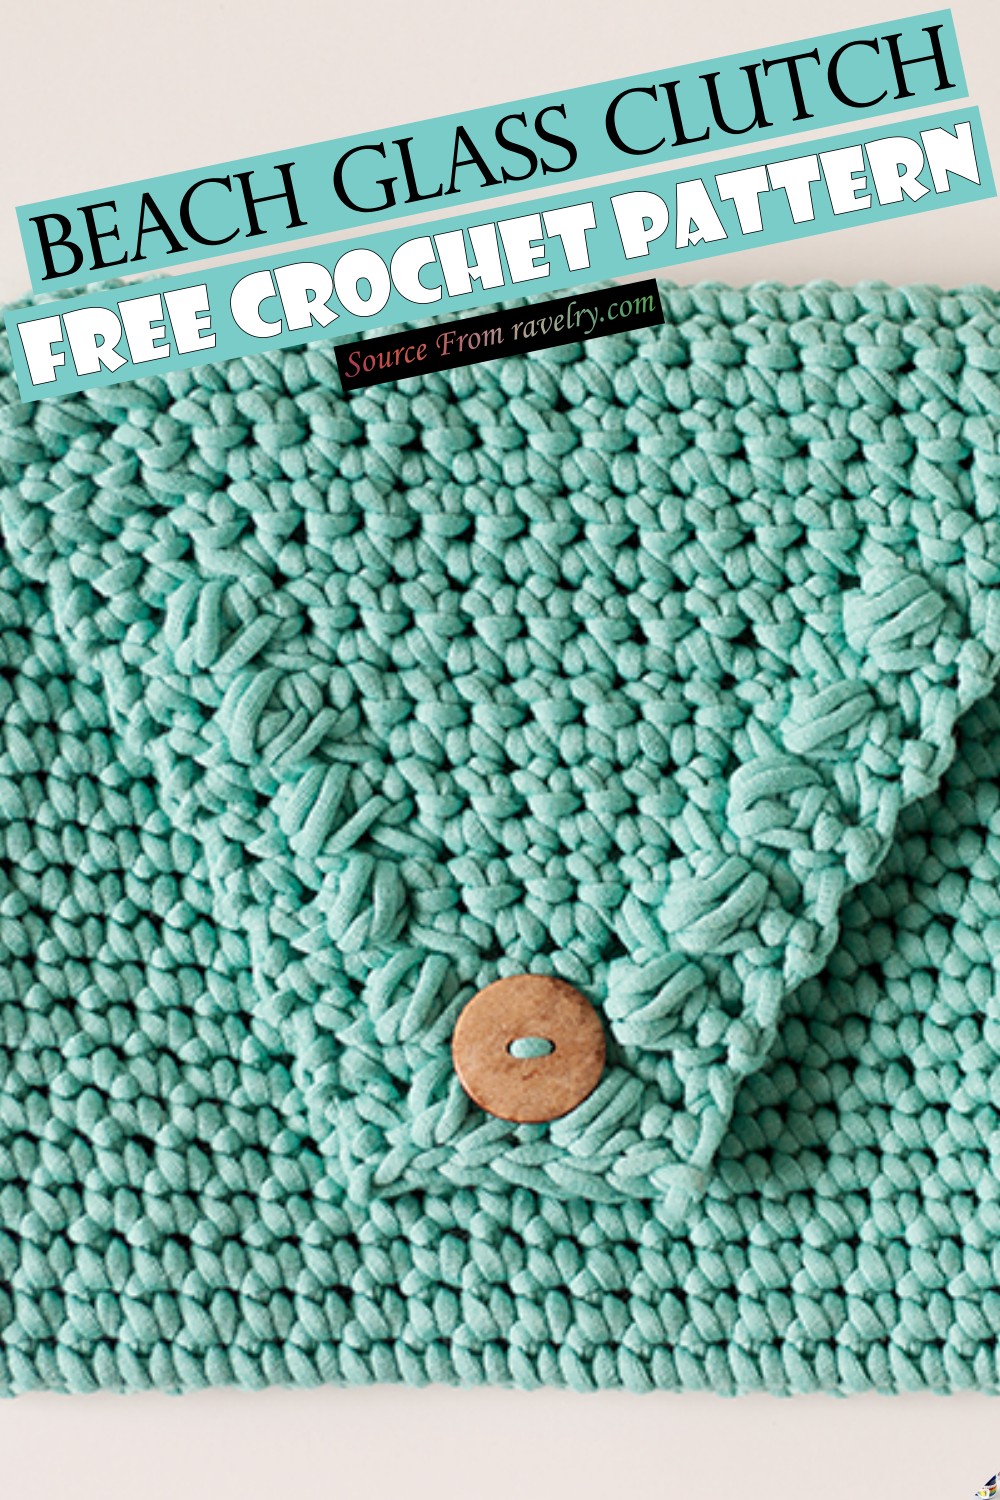 Free Crochet Beach Glass Clutch Pattern